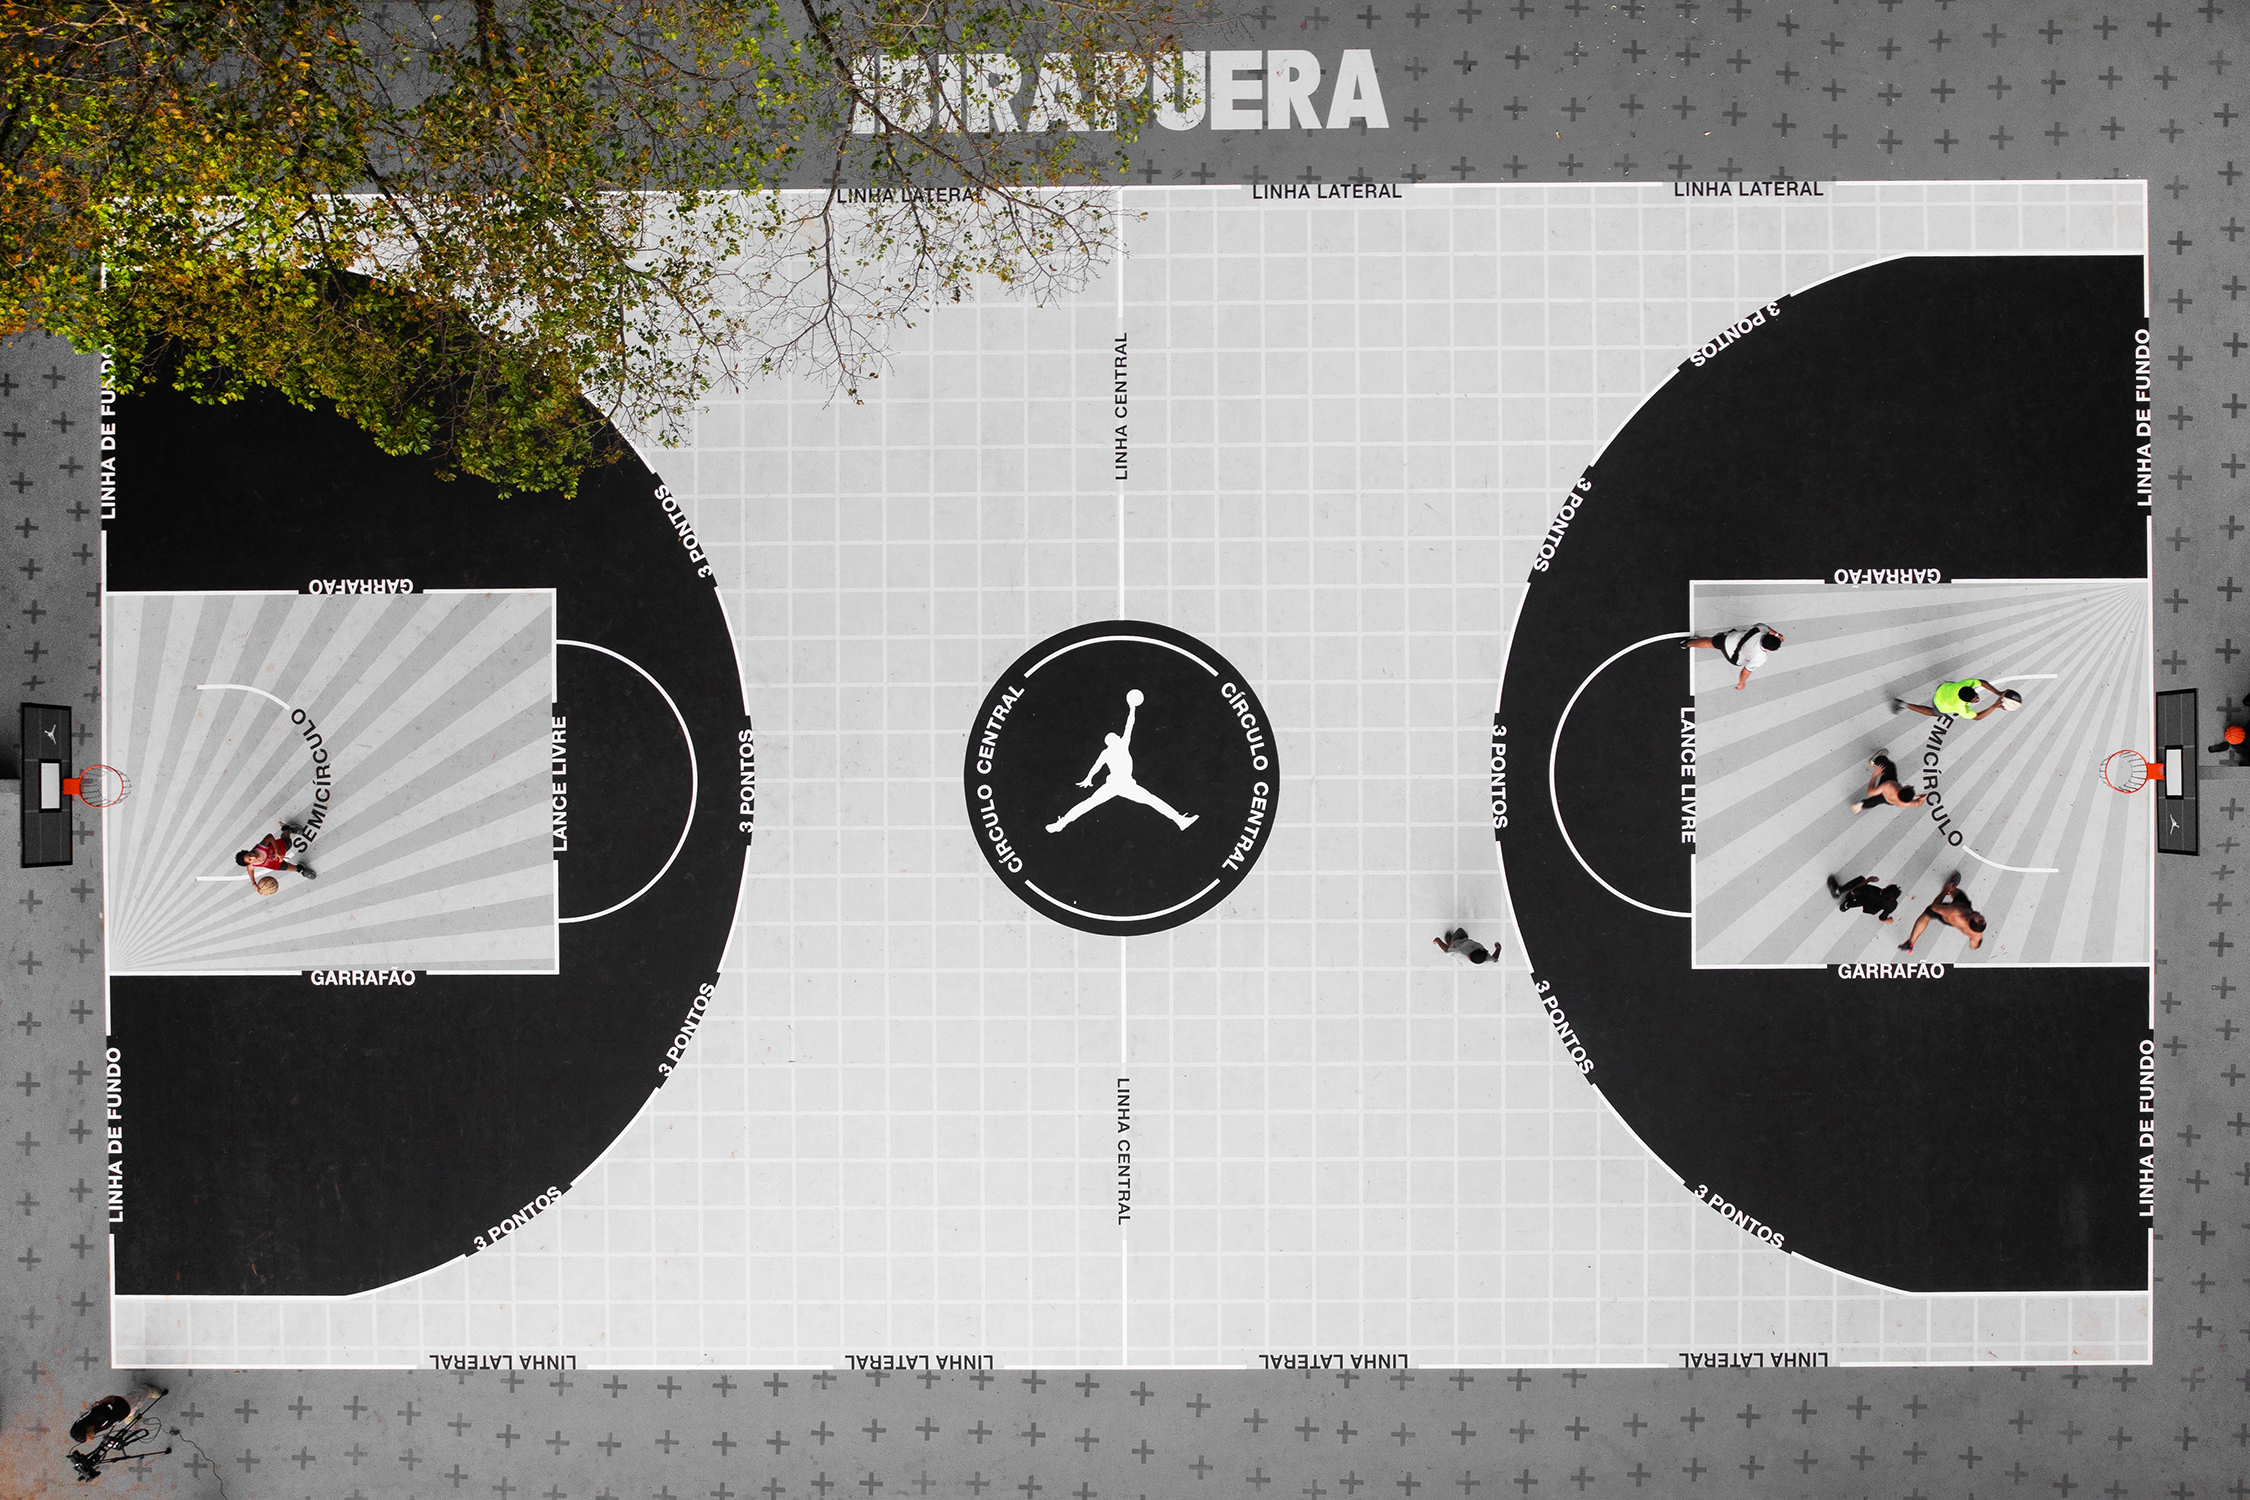 Nike Ibira - When the Urban Art meets sports court